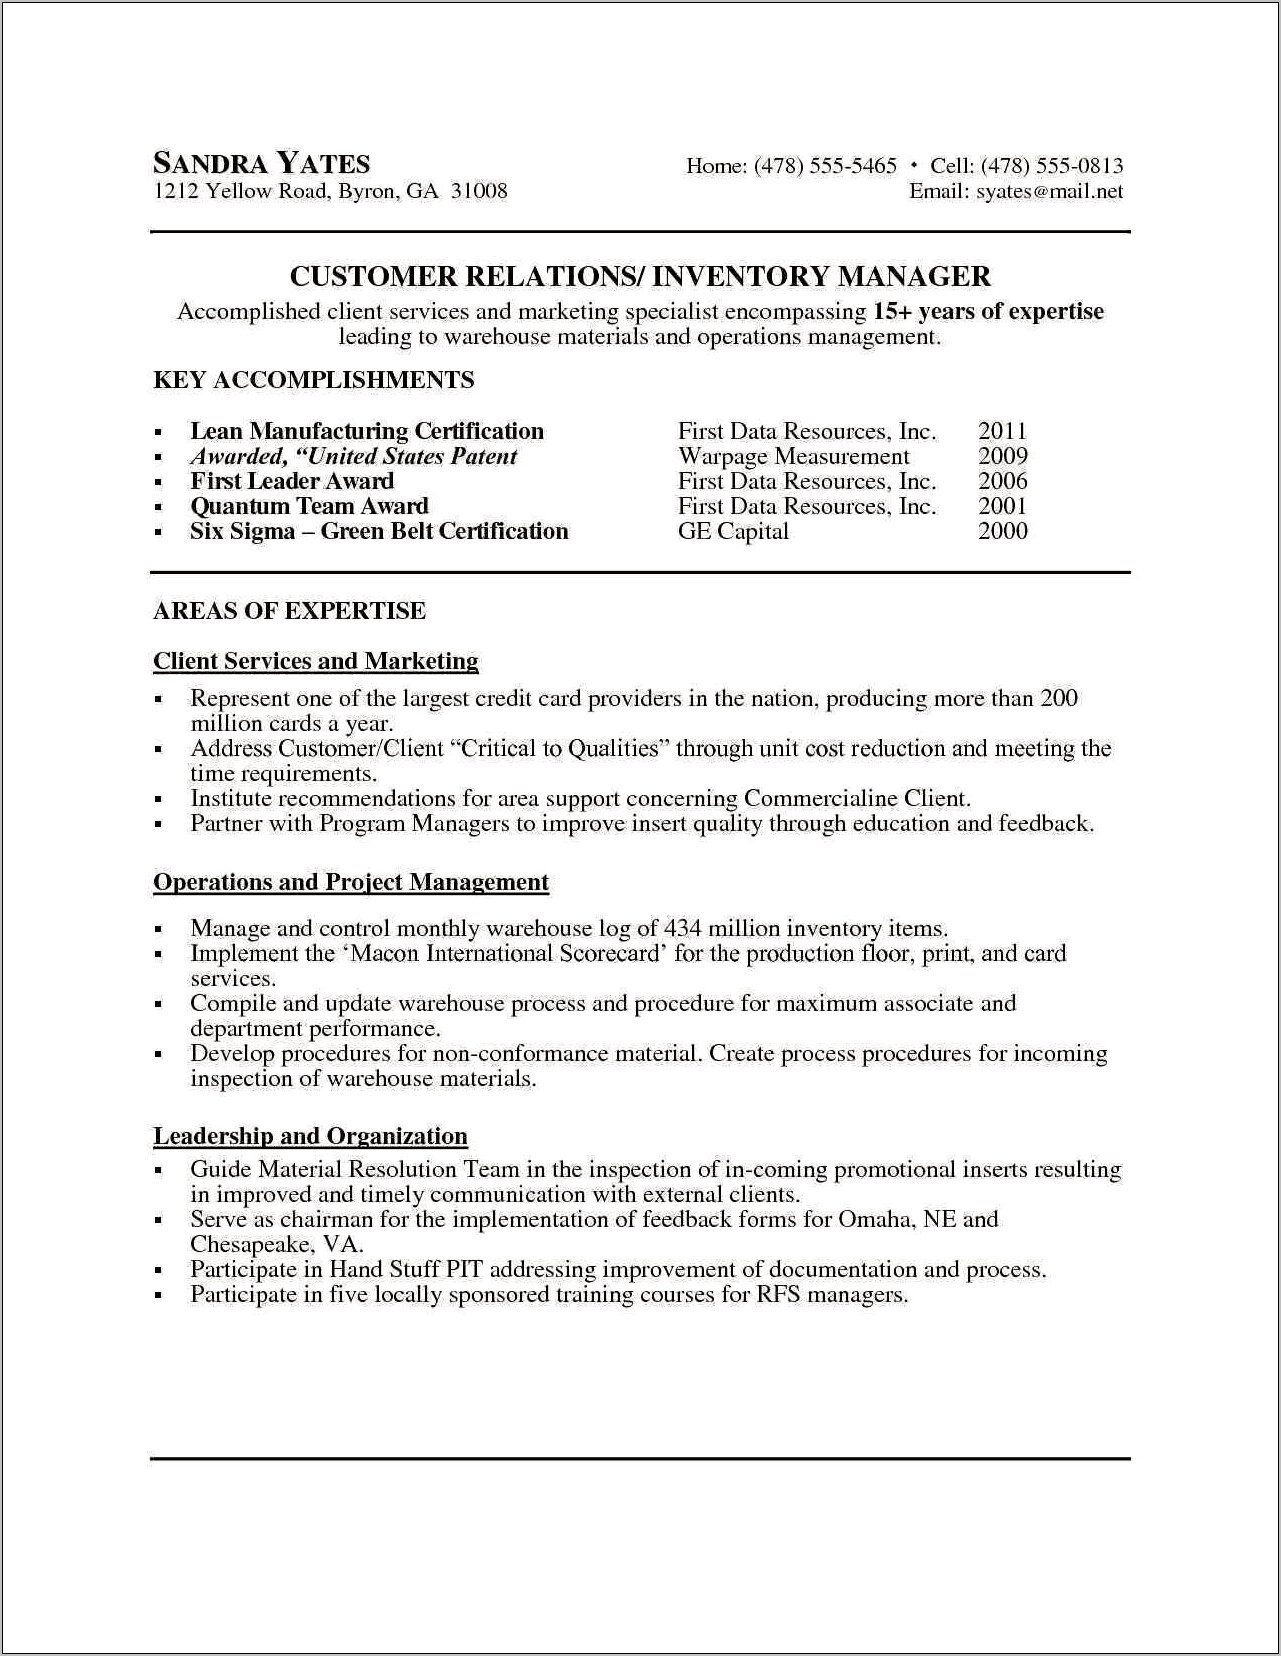 Associate Inventory Analyst Job Description And Resume